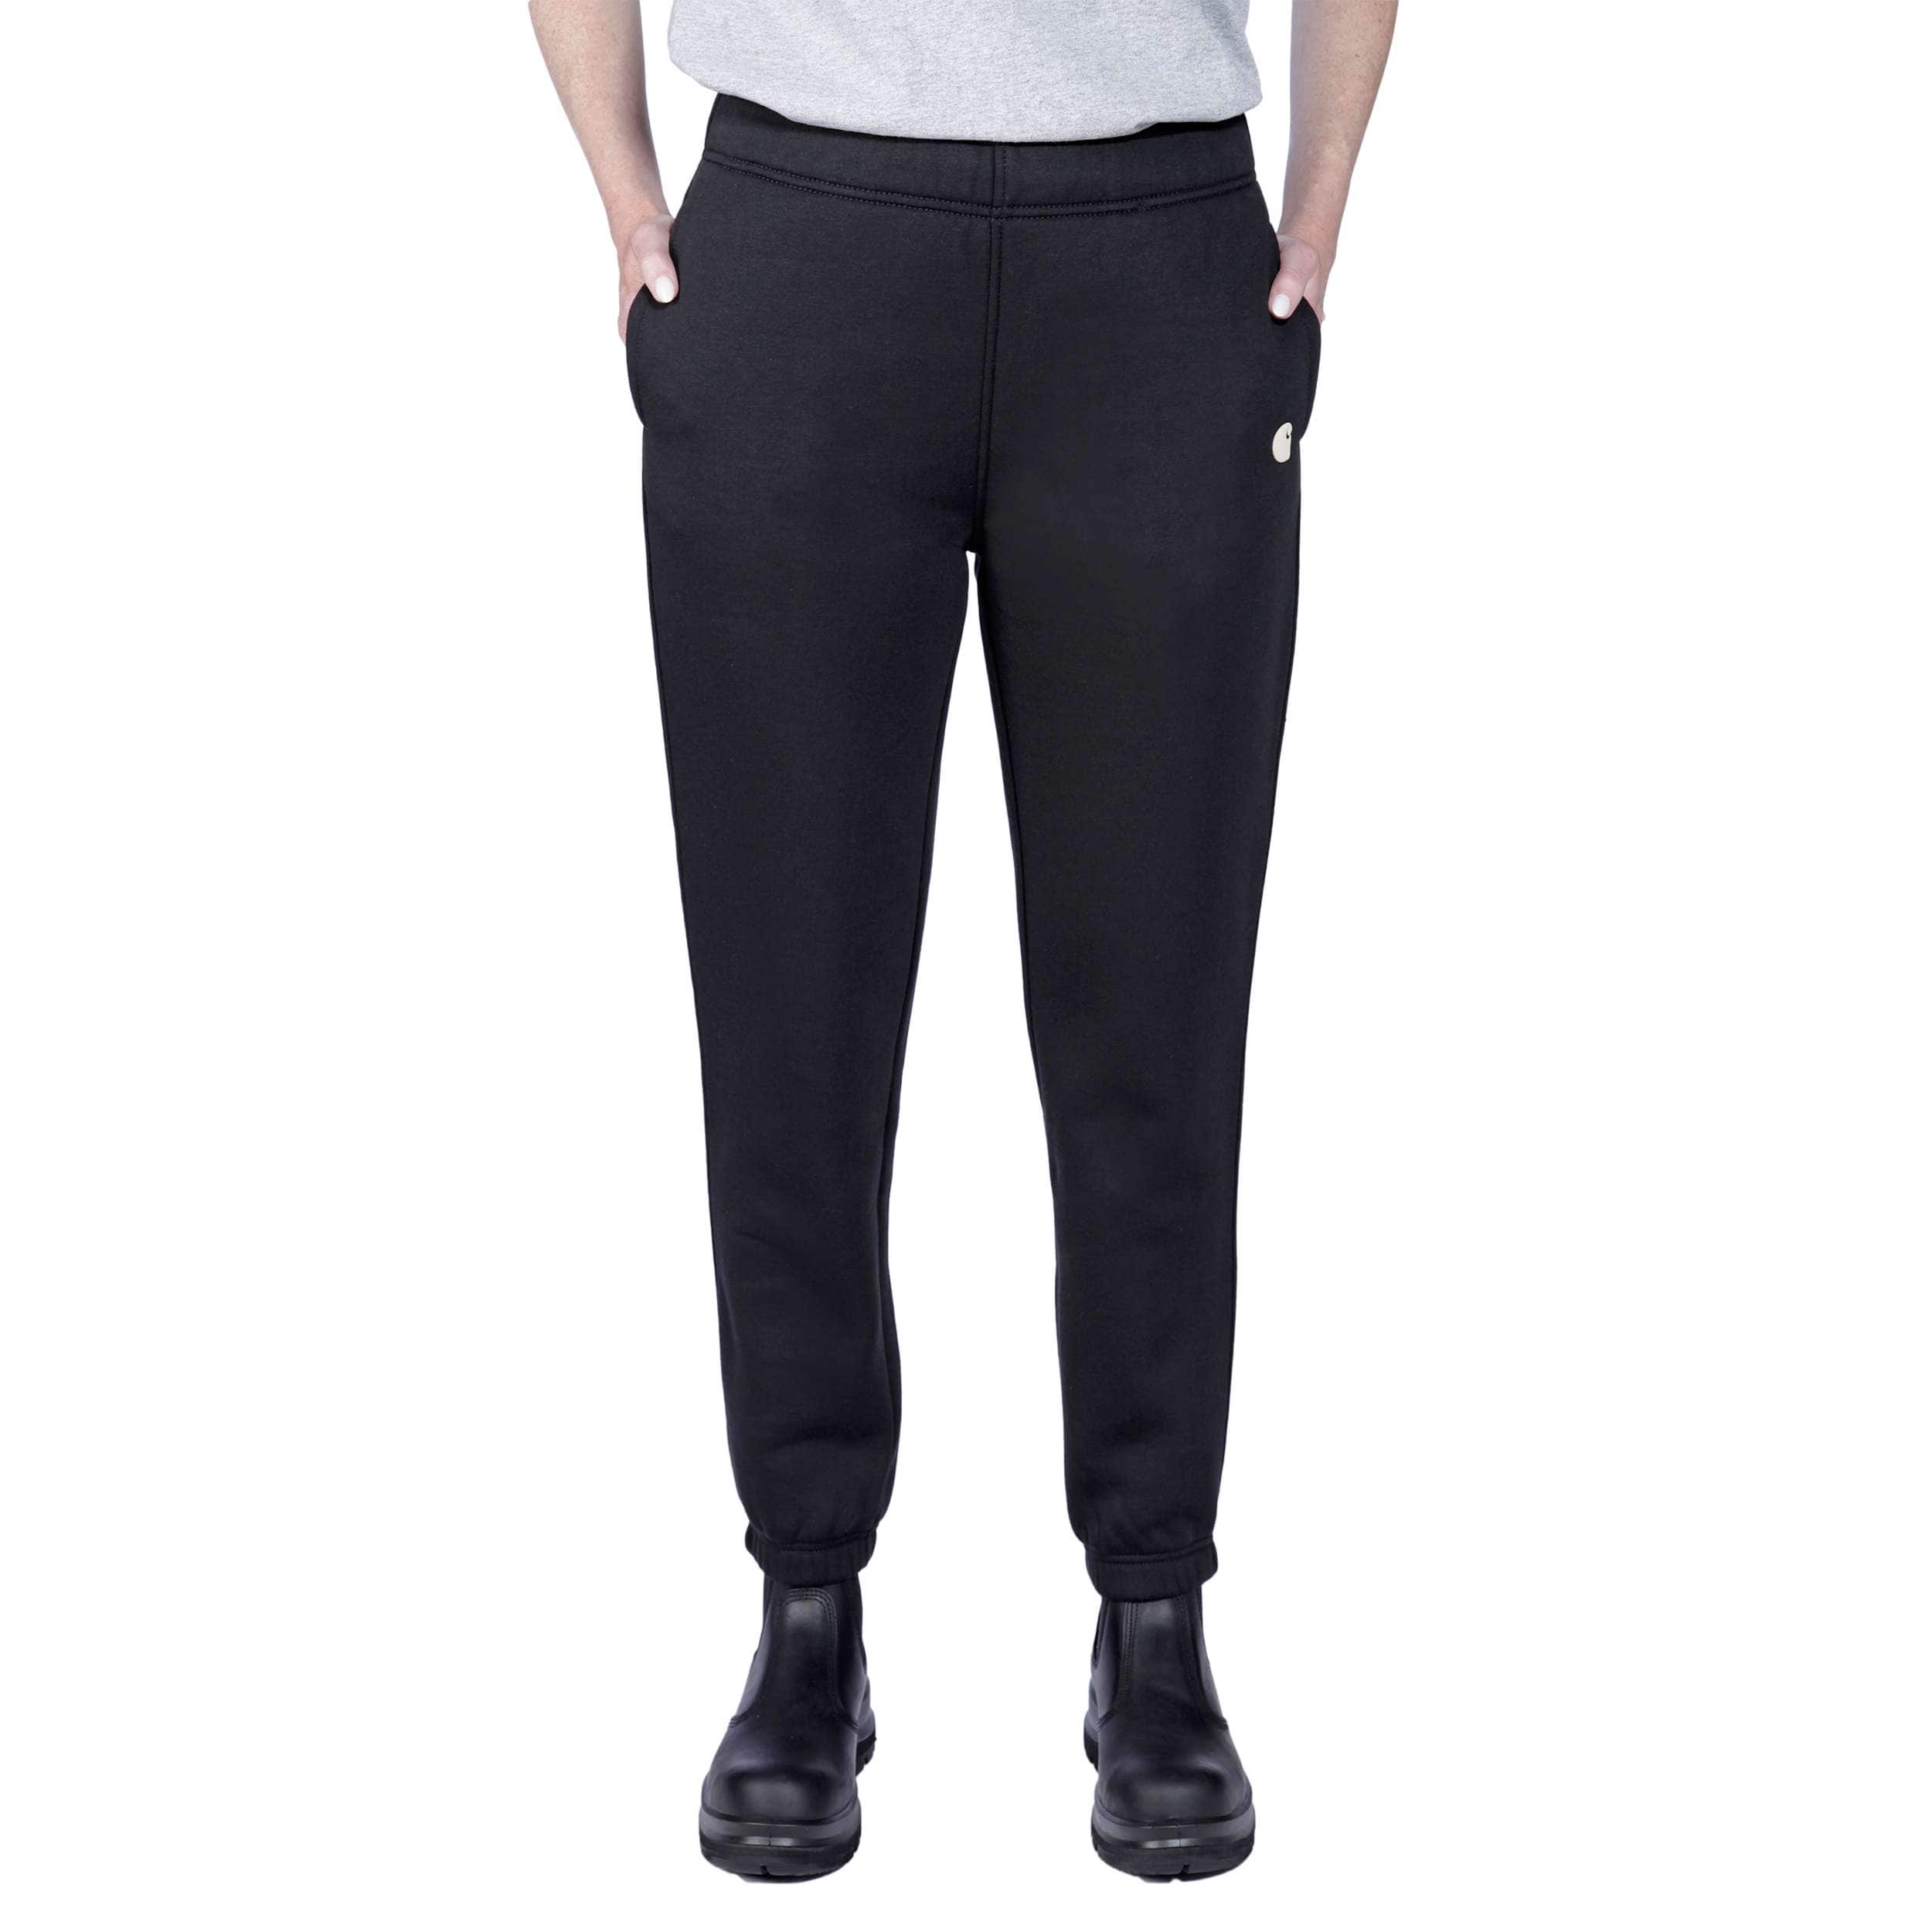 Carhartt Women's Original Fit Fleece Lined Crawford Pants Black 18 Regular  NEW